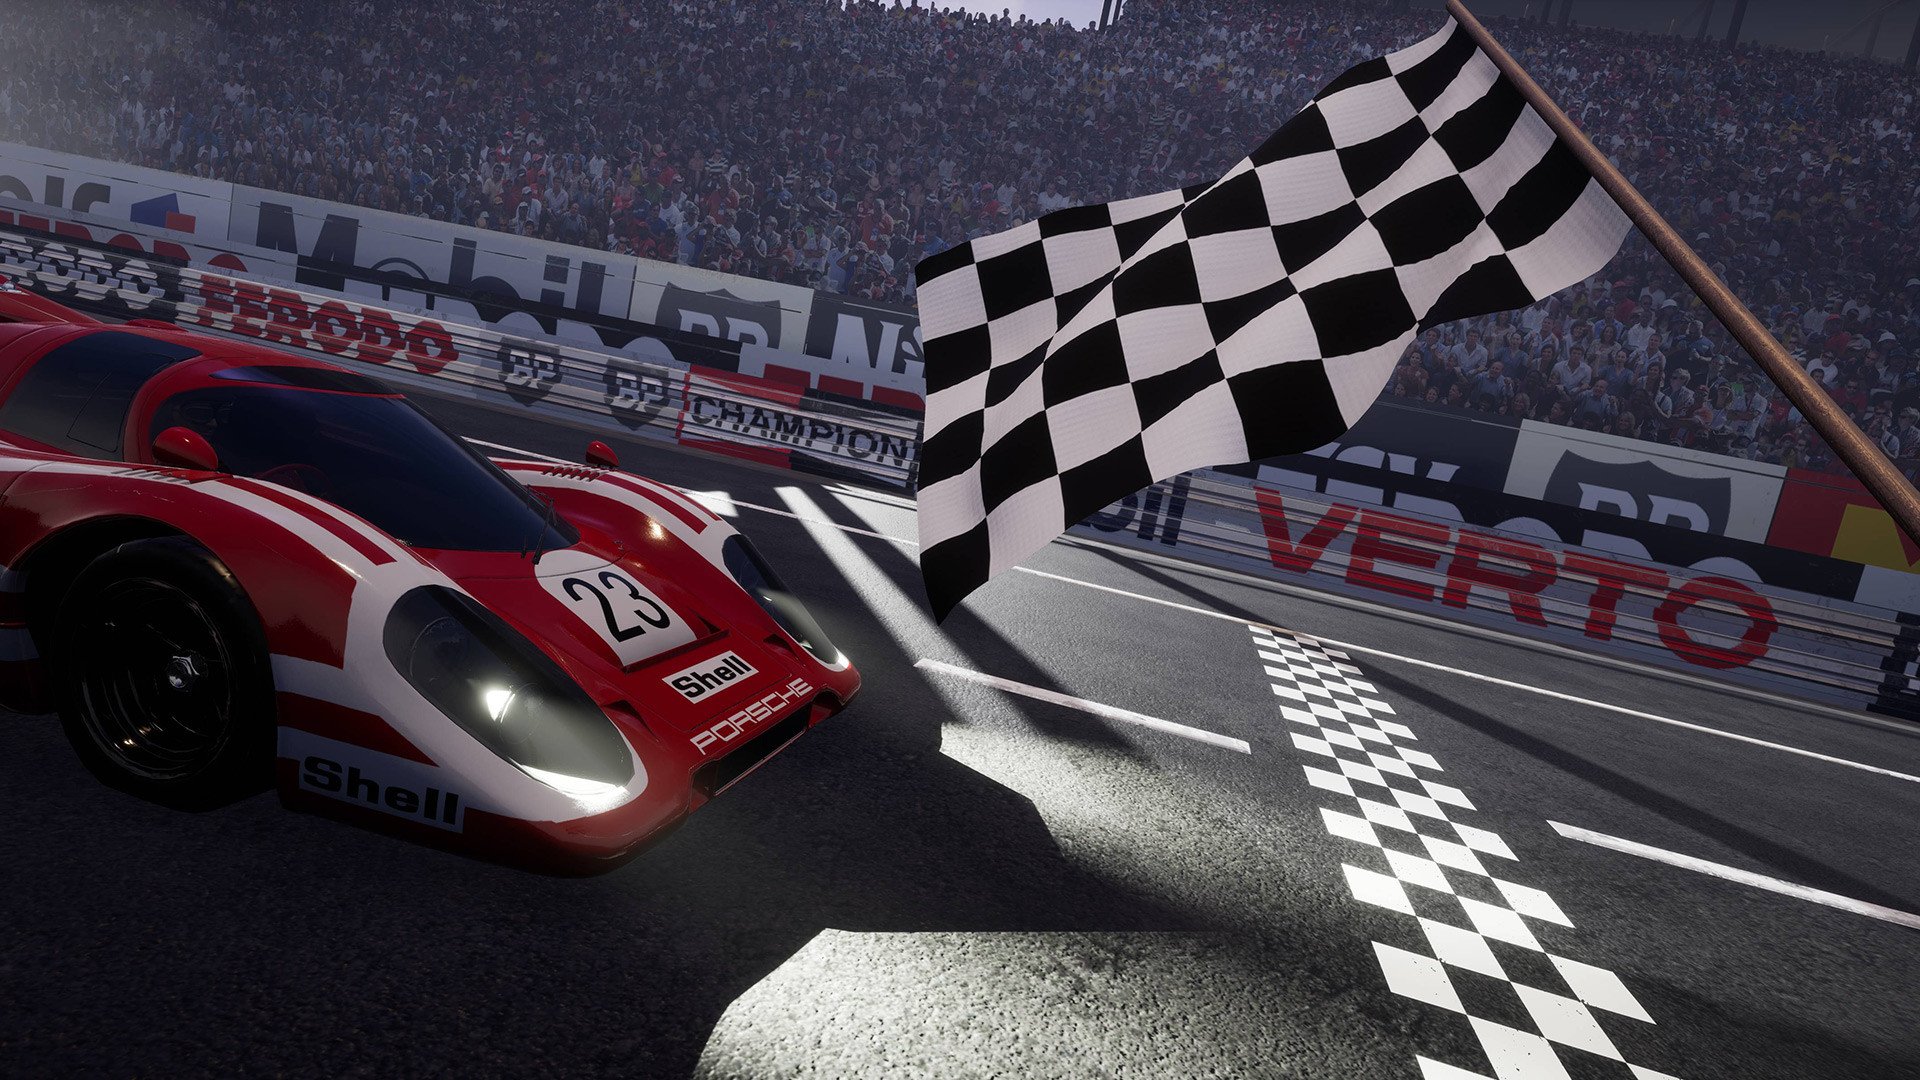 More information about "Porsche Hall of Legends VR: un'esperienza di realtà virtuale"